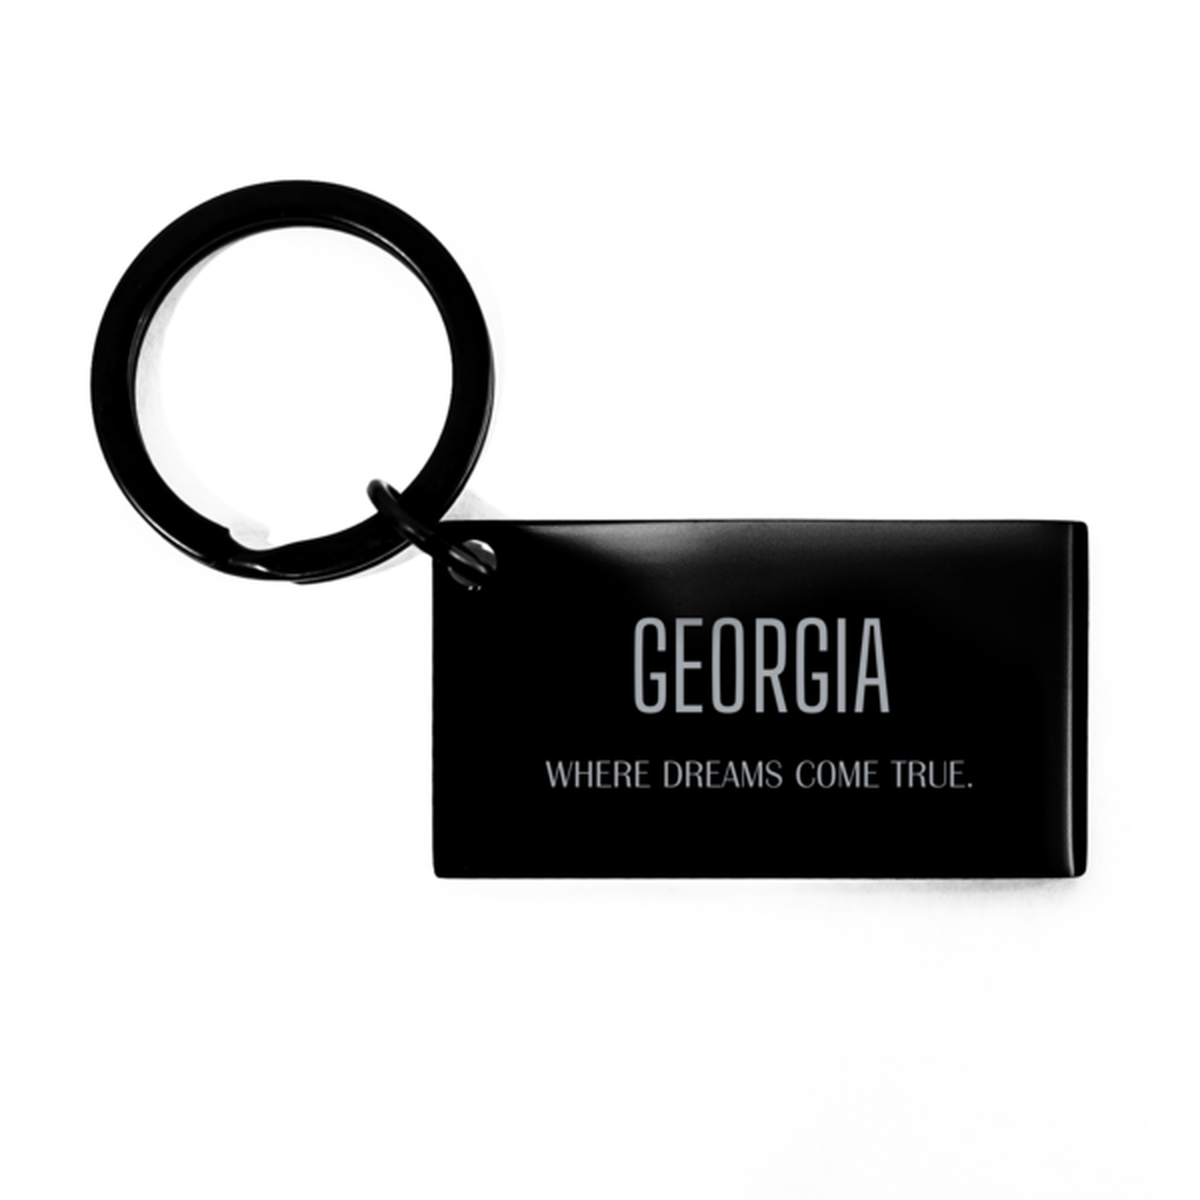 Love Georgia State Keychain, Georgia Where dreams come true, Birthday Inspirational Gifts For Georgia Men, Women, Friends